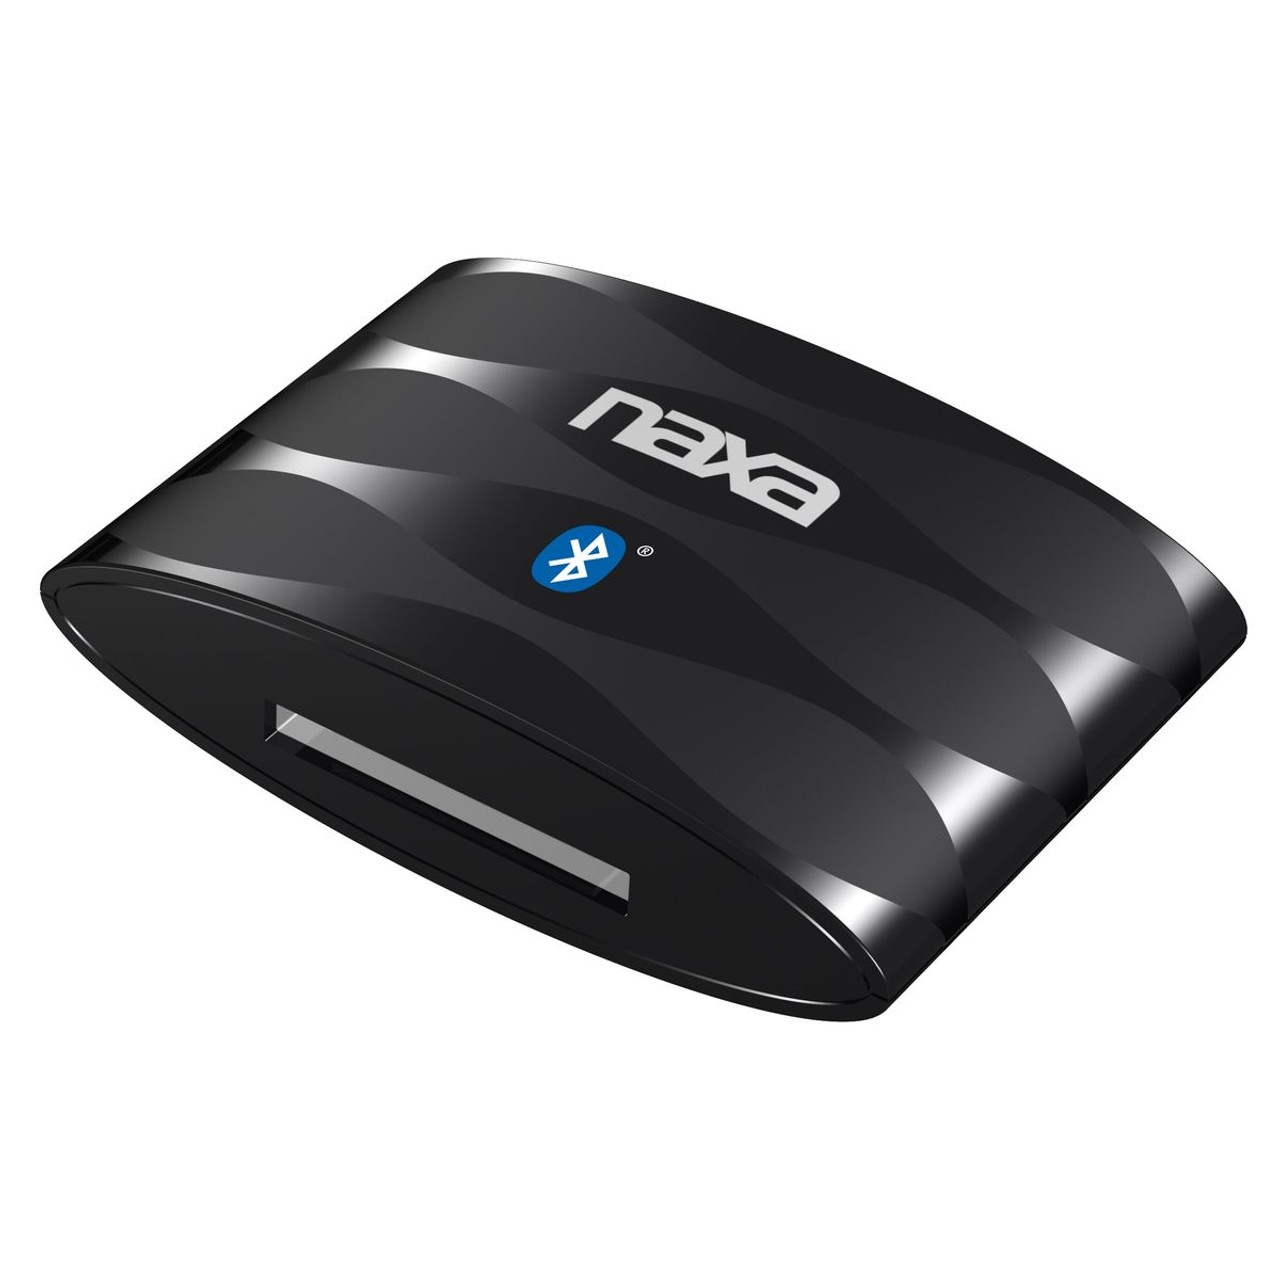 Naxa® Wireless Audio Adapter with Bluetooth & Apple Dock Connectors, NAB-4000 product image